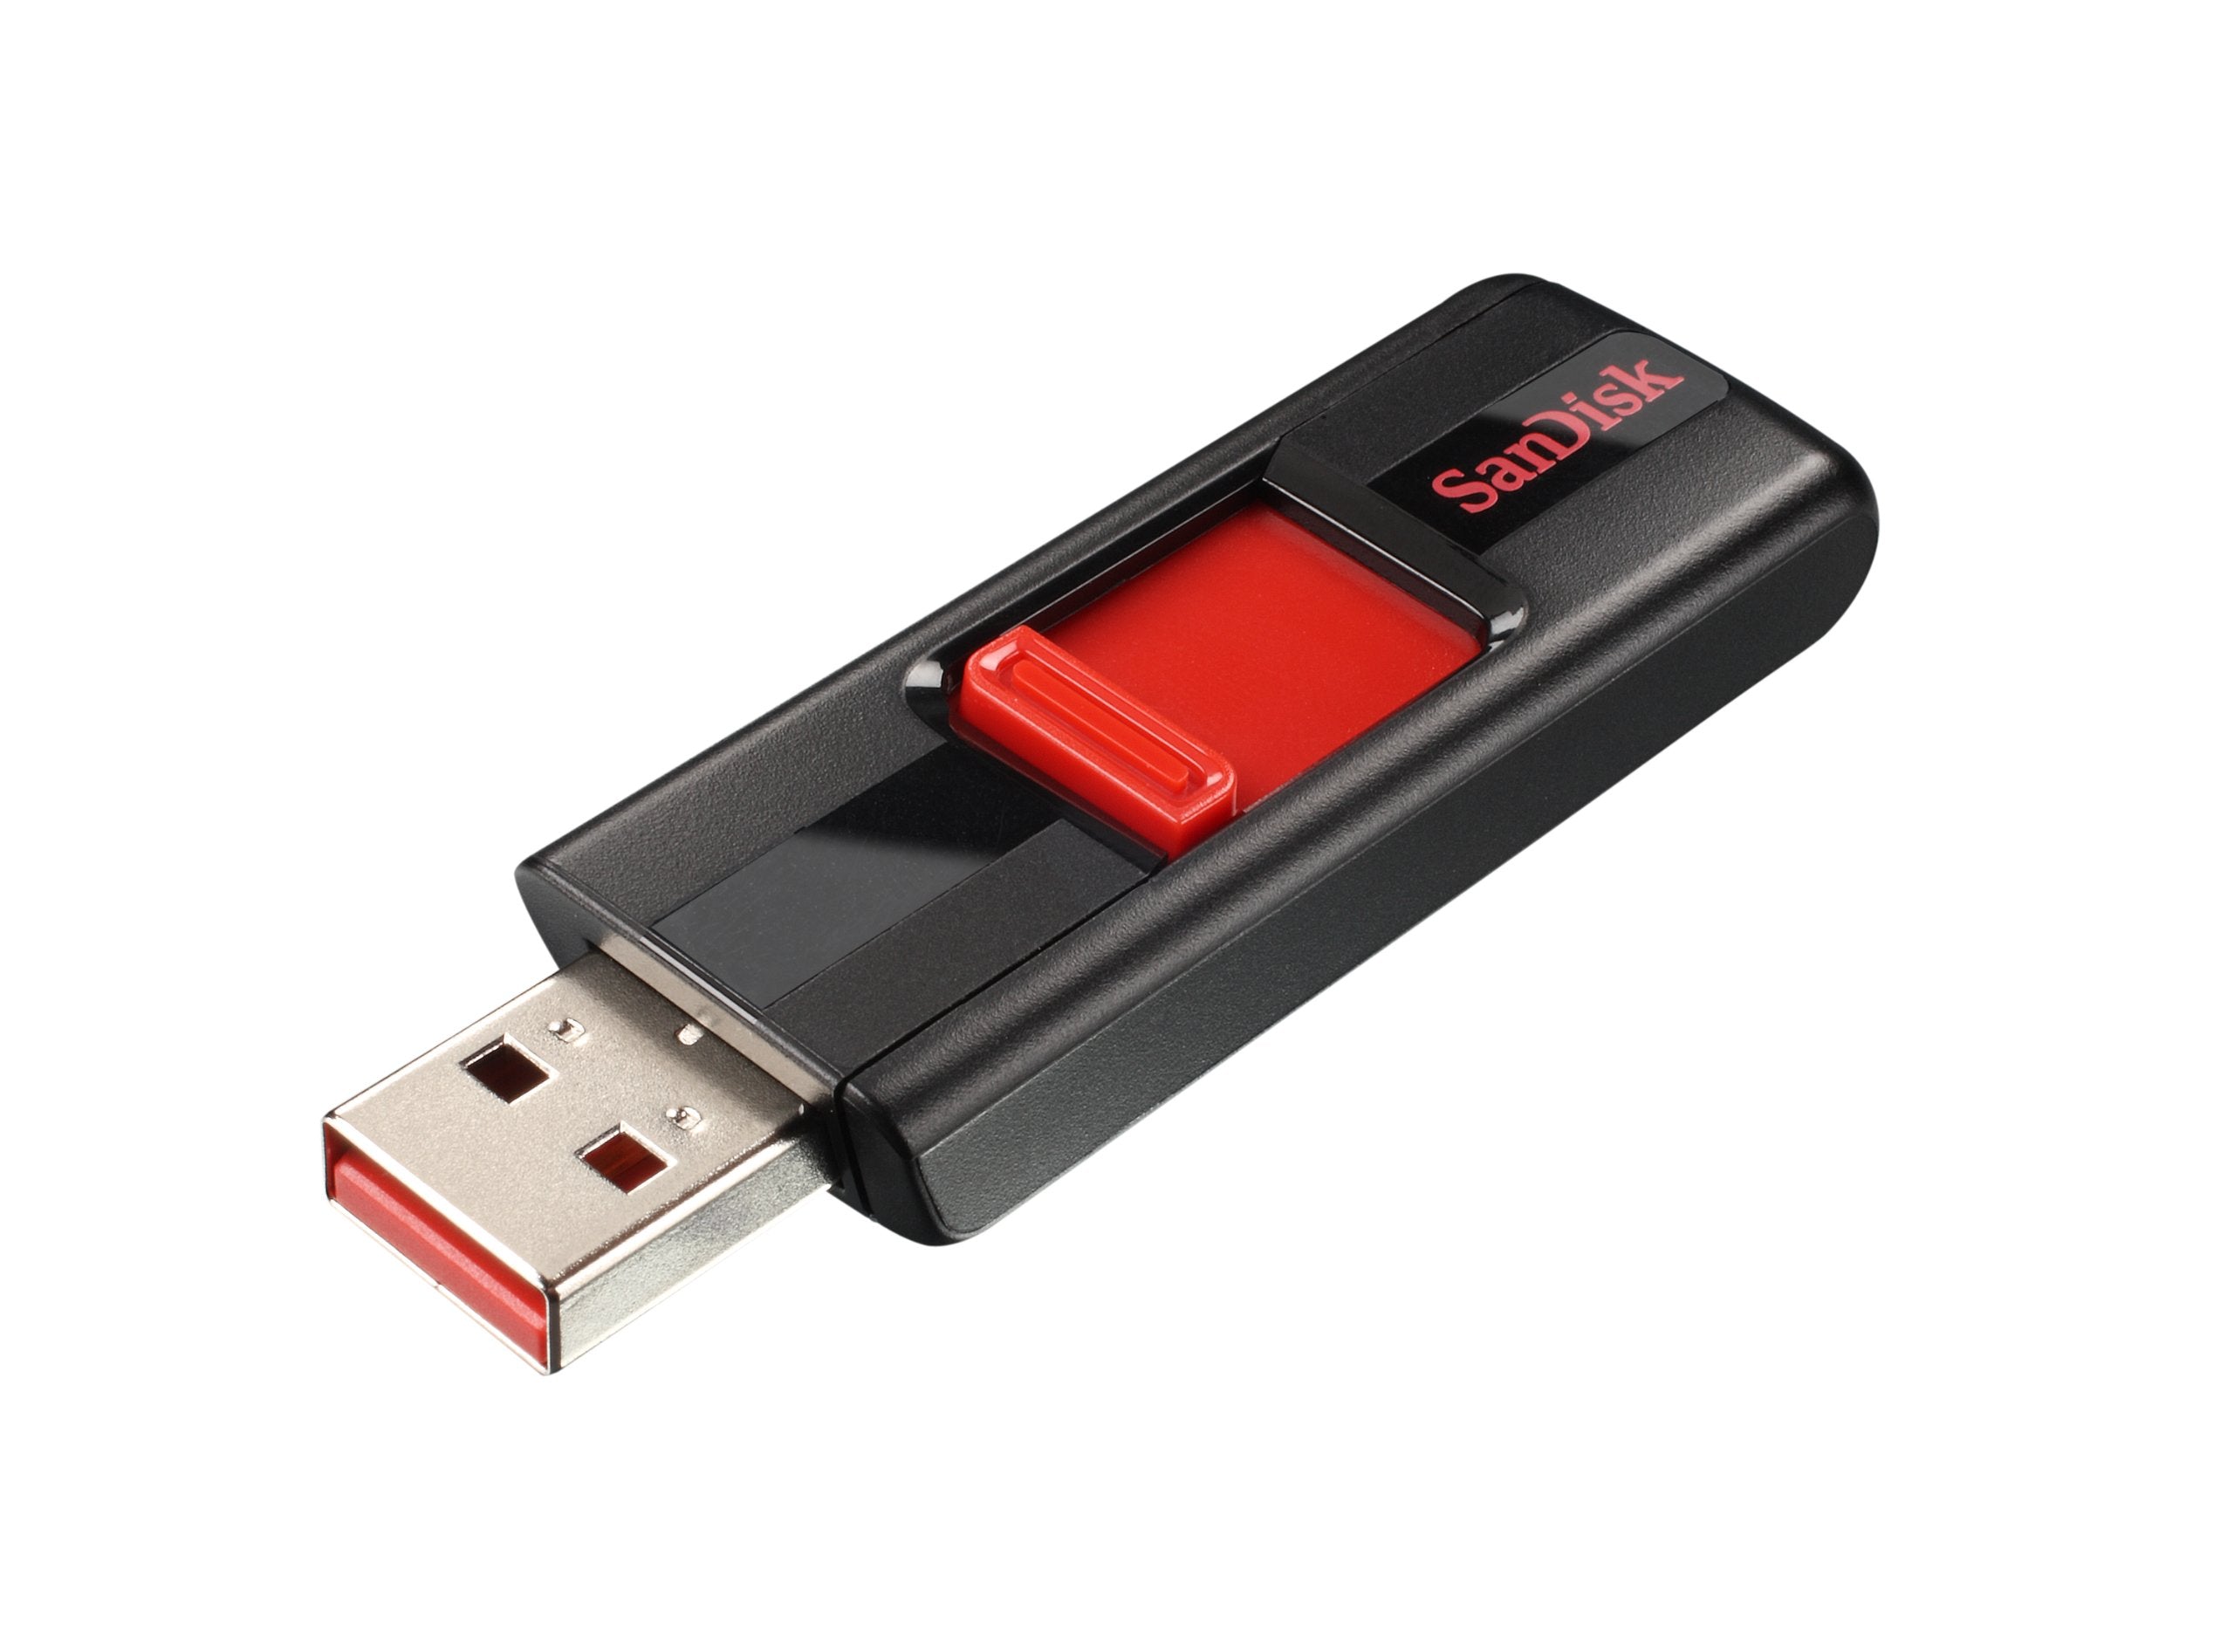 SanDisk 16GB 2-Pack Cruzer USB 2.0 Flash Drive (2x16GB) - SDCZ36-016G-AFFP2